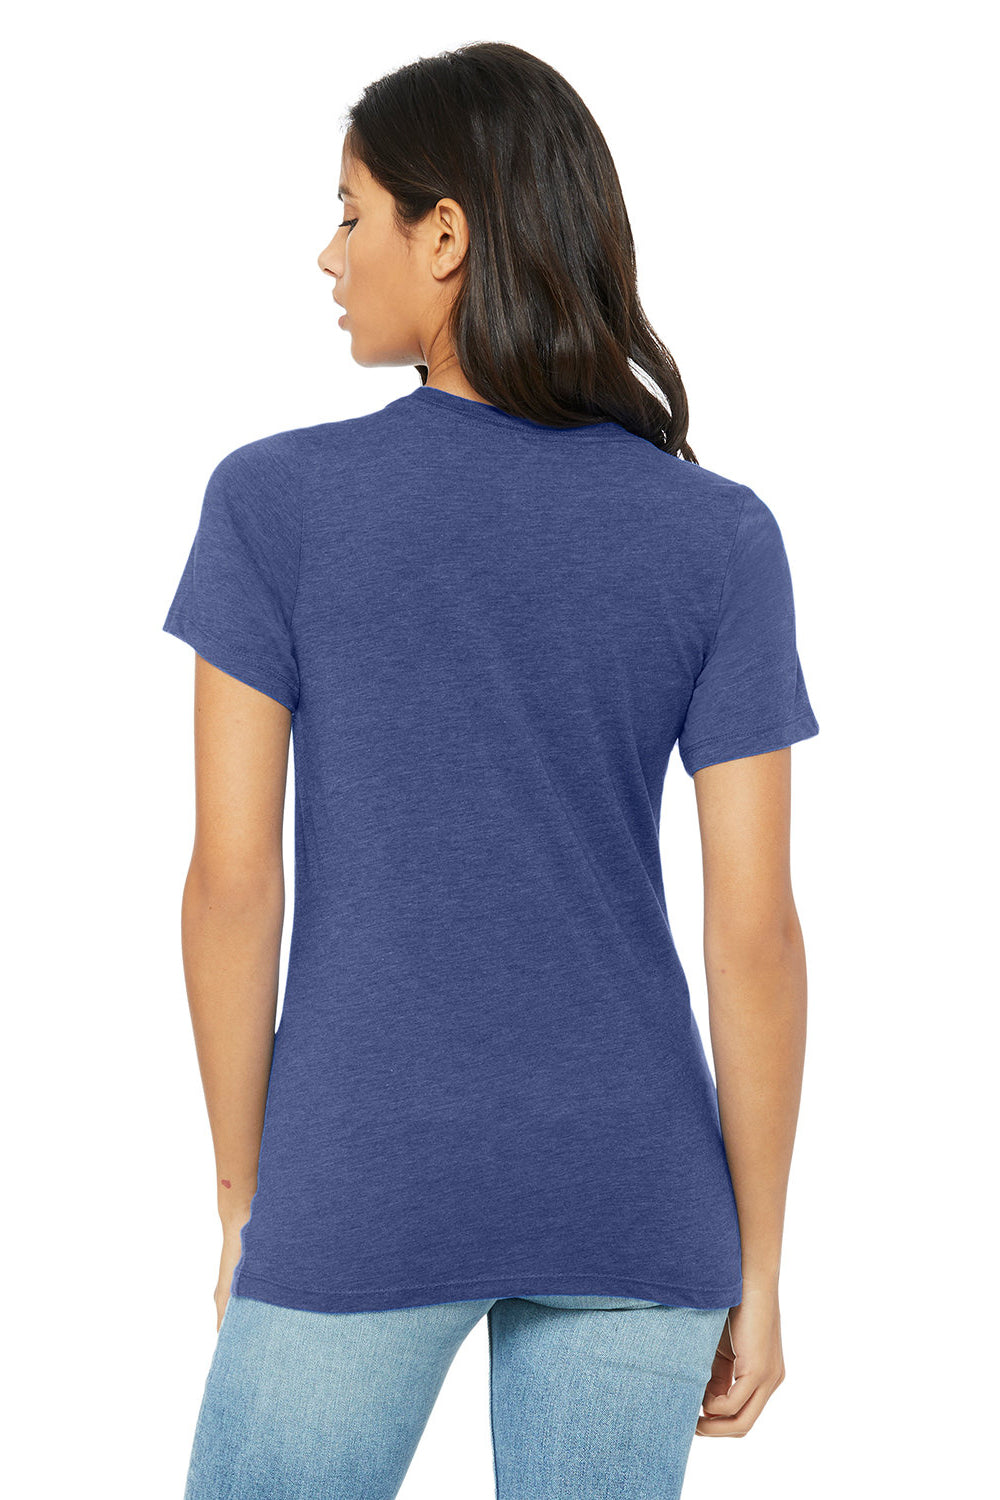 Bella + Canvas BC6413 Womens Short Sleeve Crewneck T-Shirt True Royal Blue Model Back